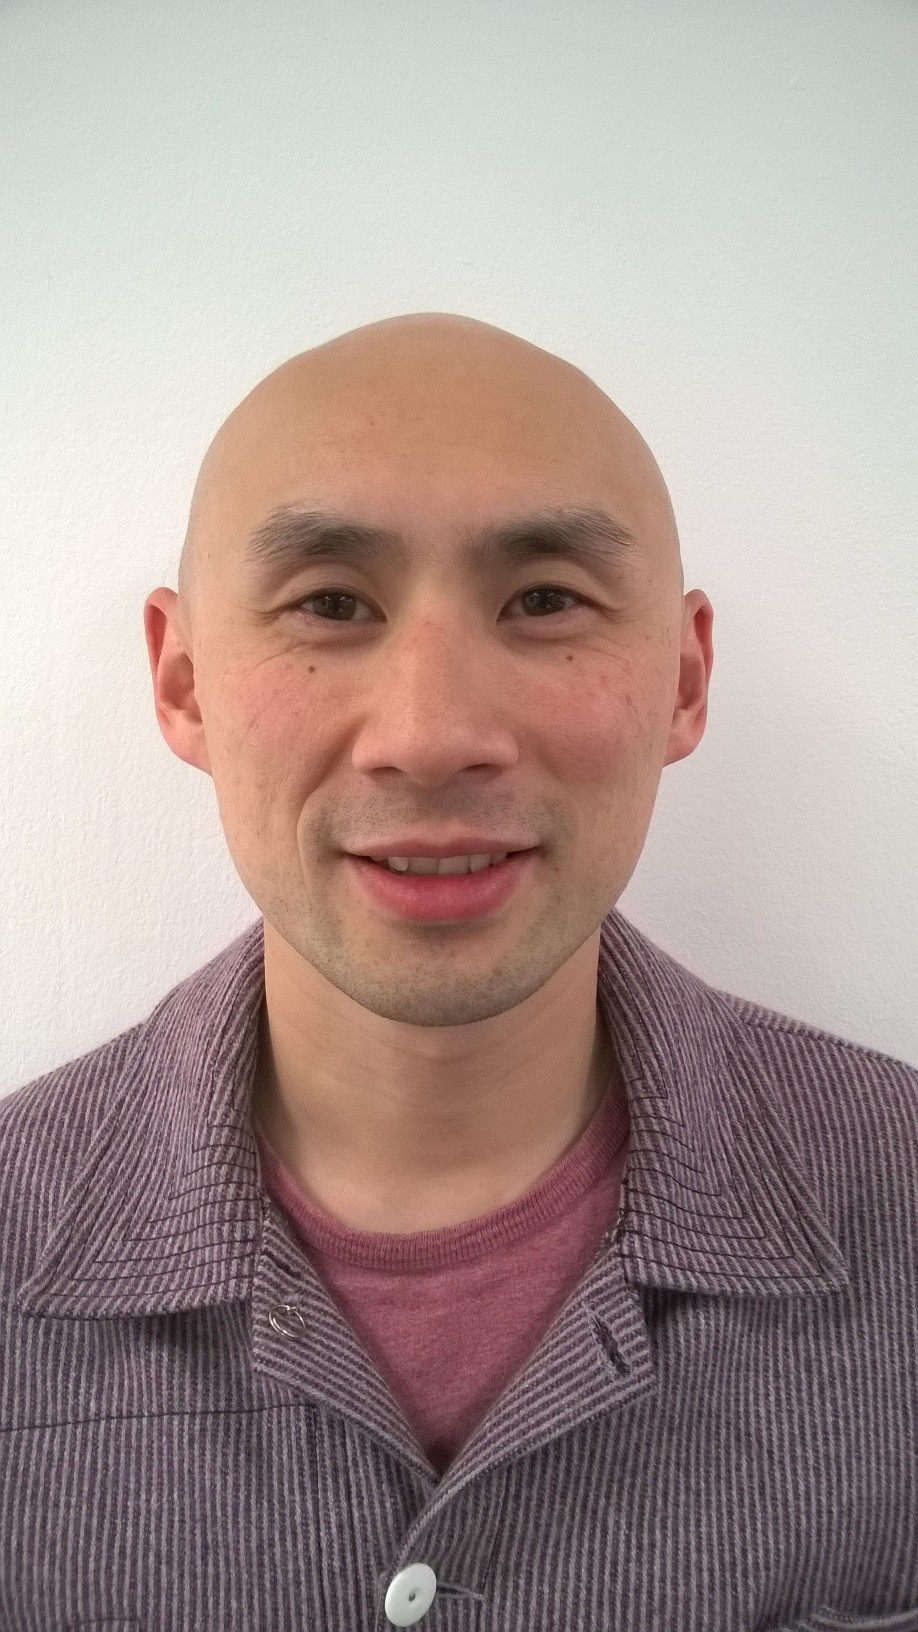 Edmund Chan, team manager at Childline